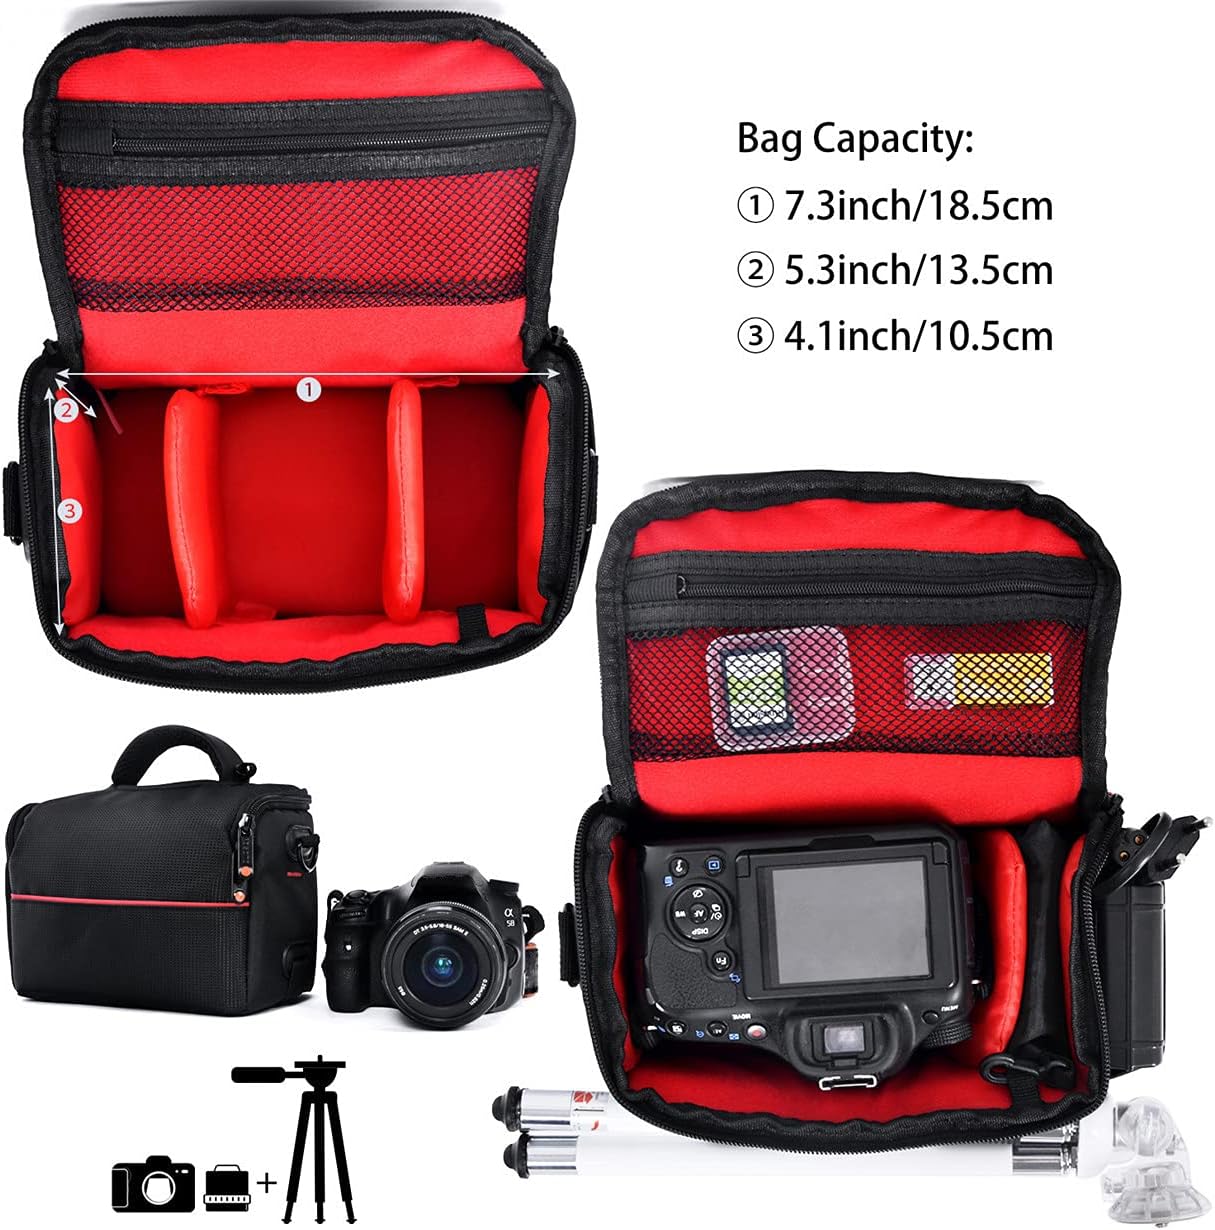 FOSOTO Compact Camera Shoulder Bag Case with Waterproof Rain Cover Compatible for Canon EOS M50 PowerShot SX420 SX430 SX70 SX50 SX30IS Sony a6400 RX10 DSC-H300 Nikon Coolpix P900